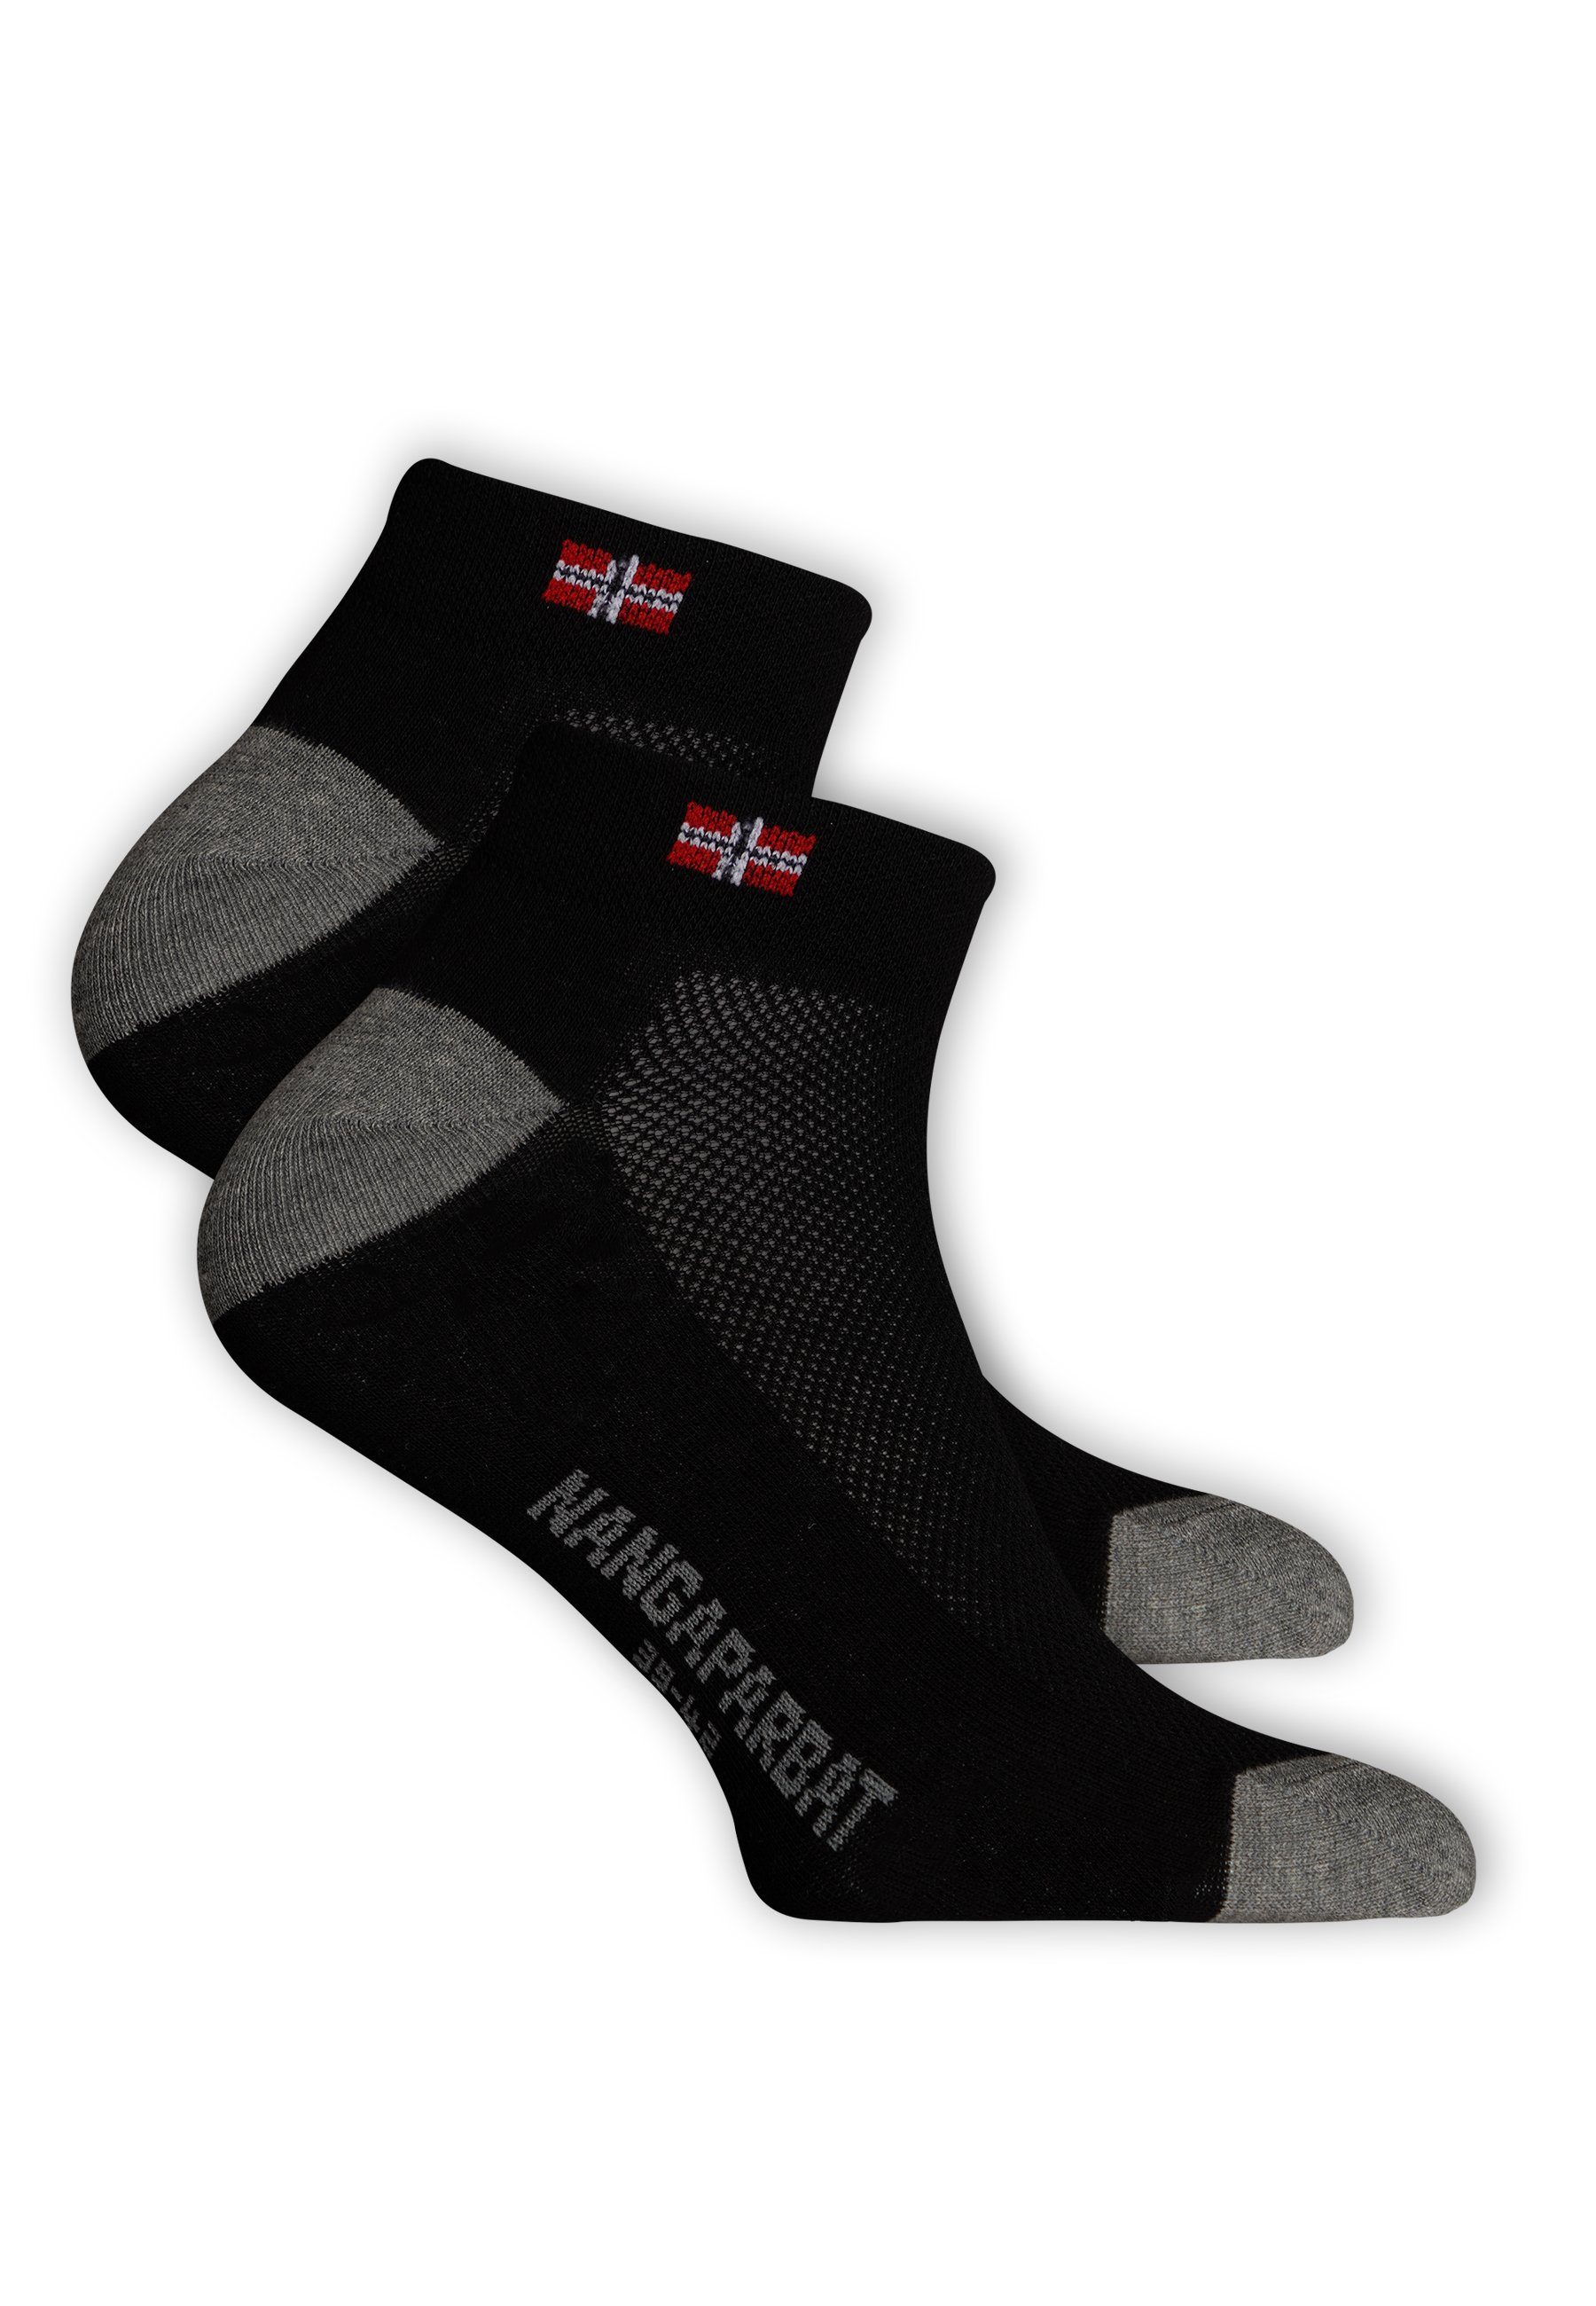 NANGAPARBAT schwarz Socken komfortabler mit Trittdämpfung